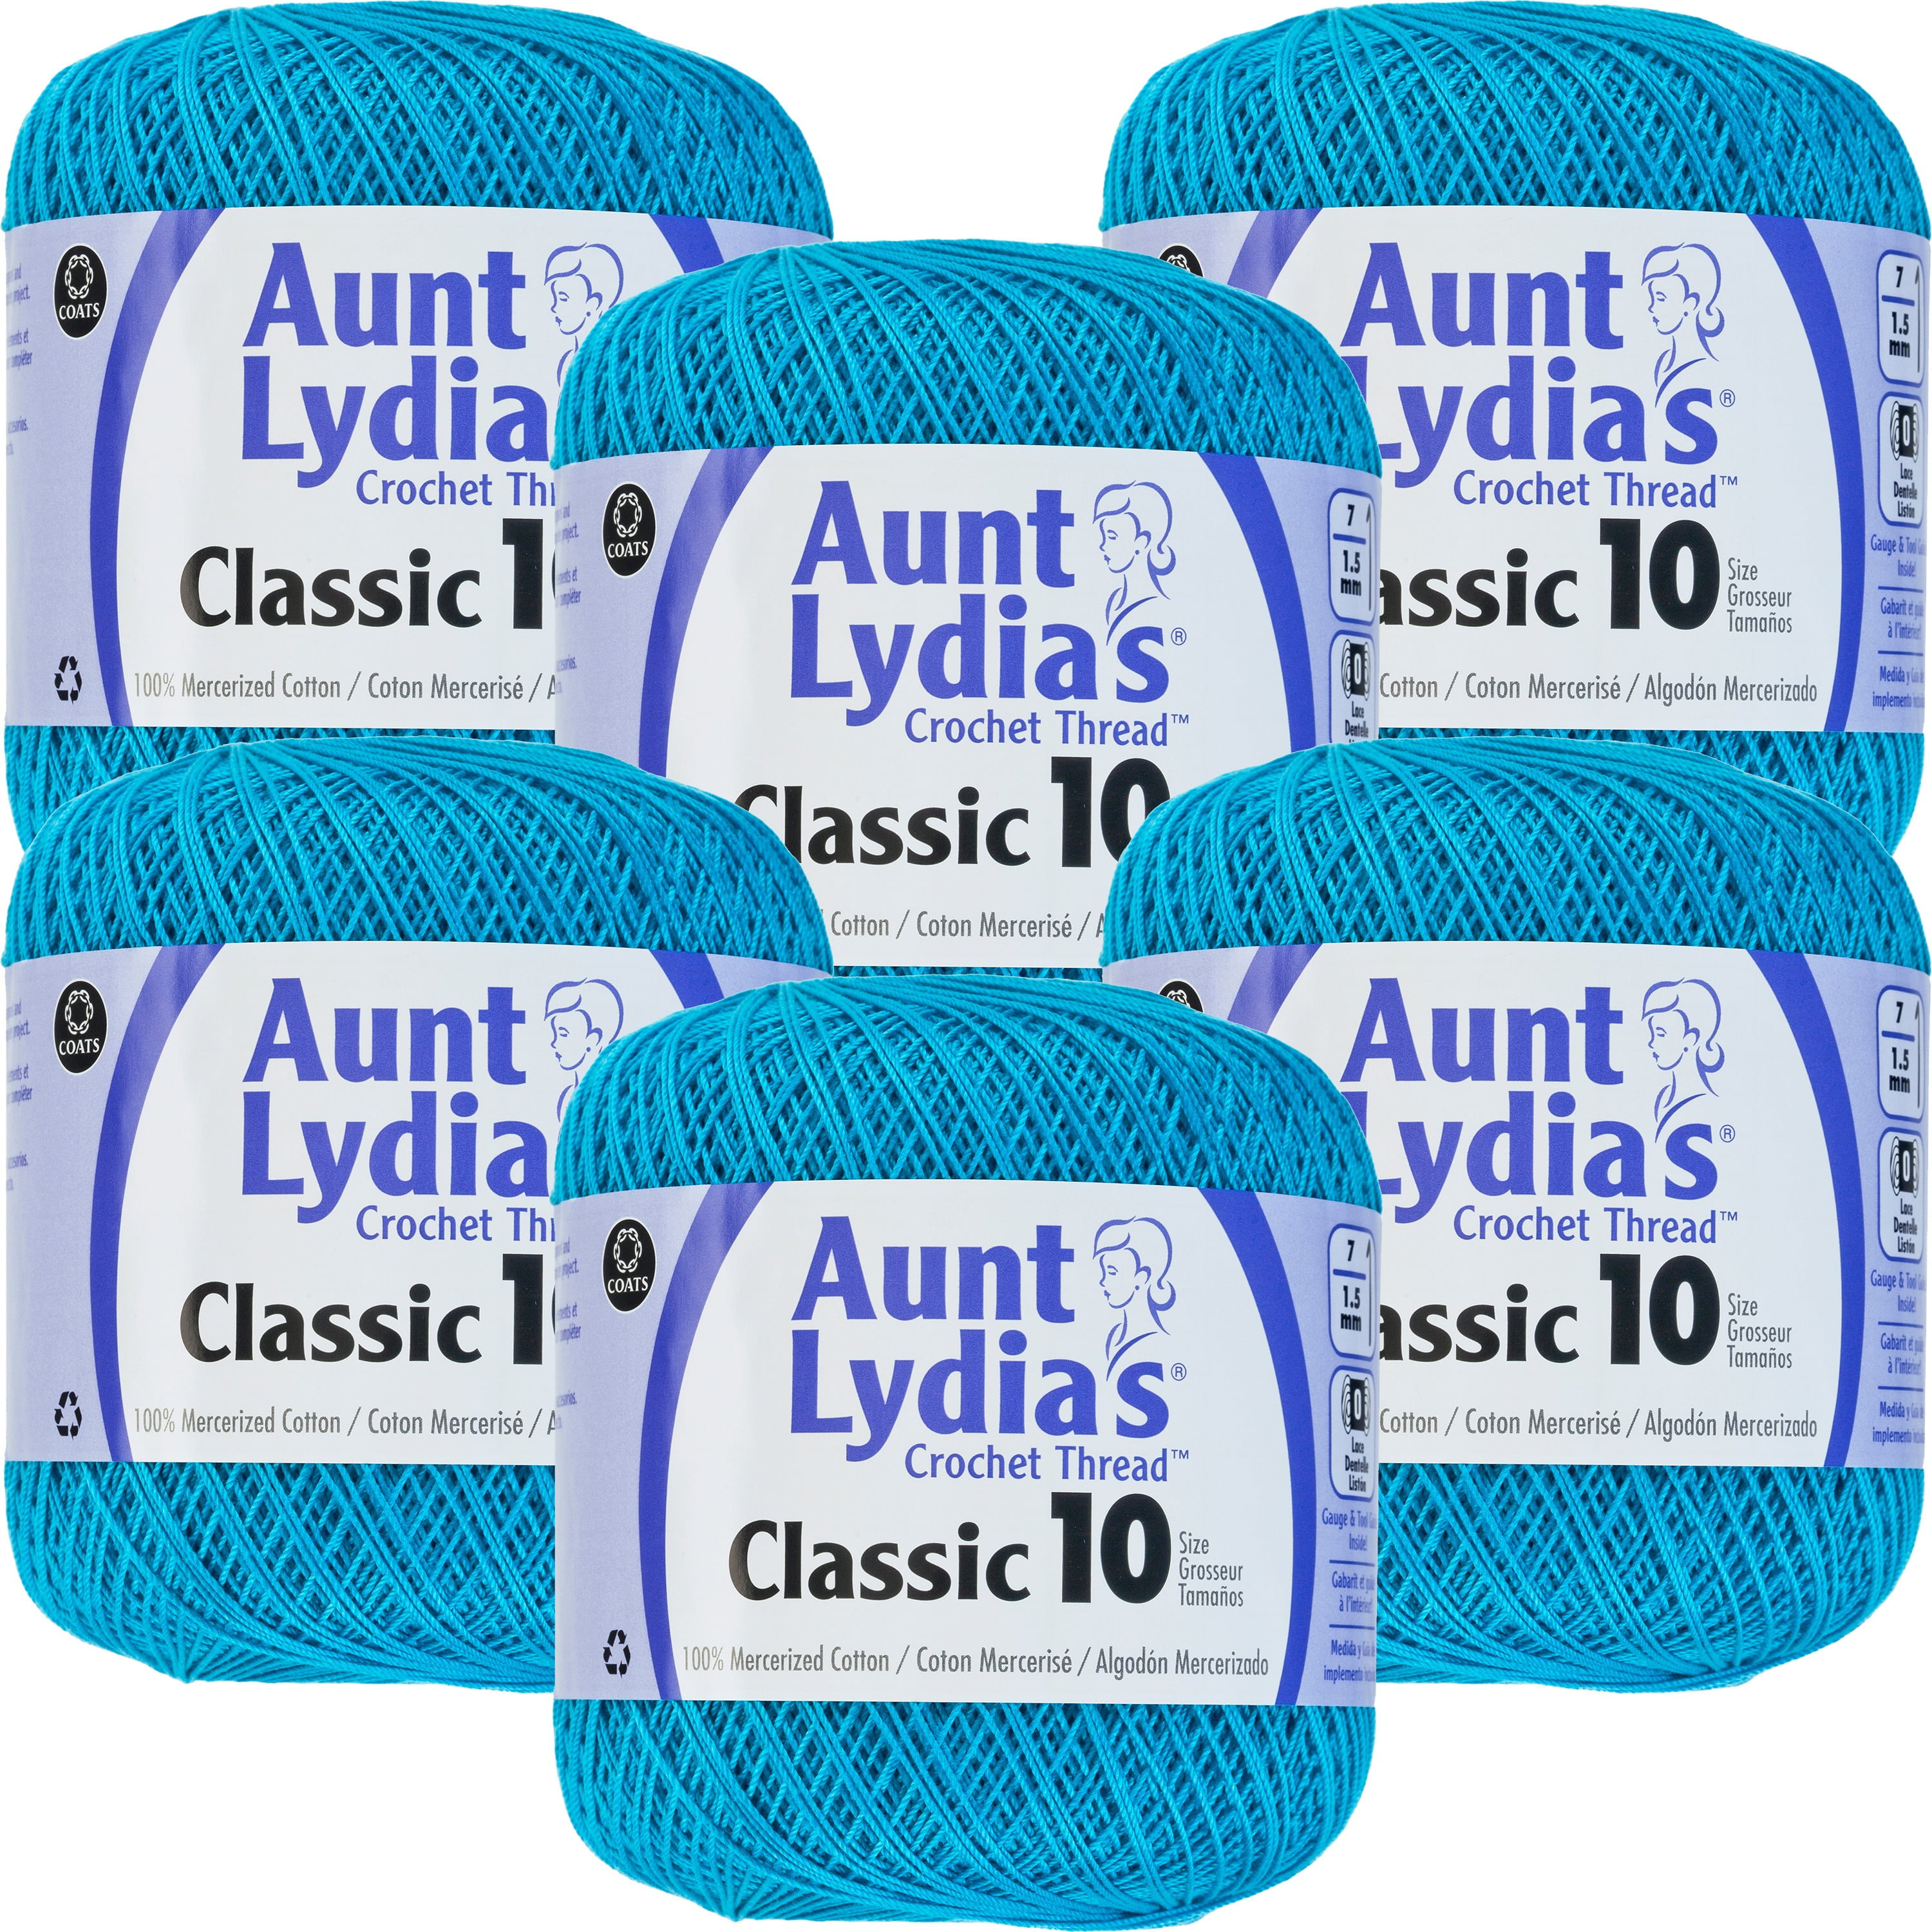 Aunt Lydias Crochet Thread Classic 10 